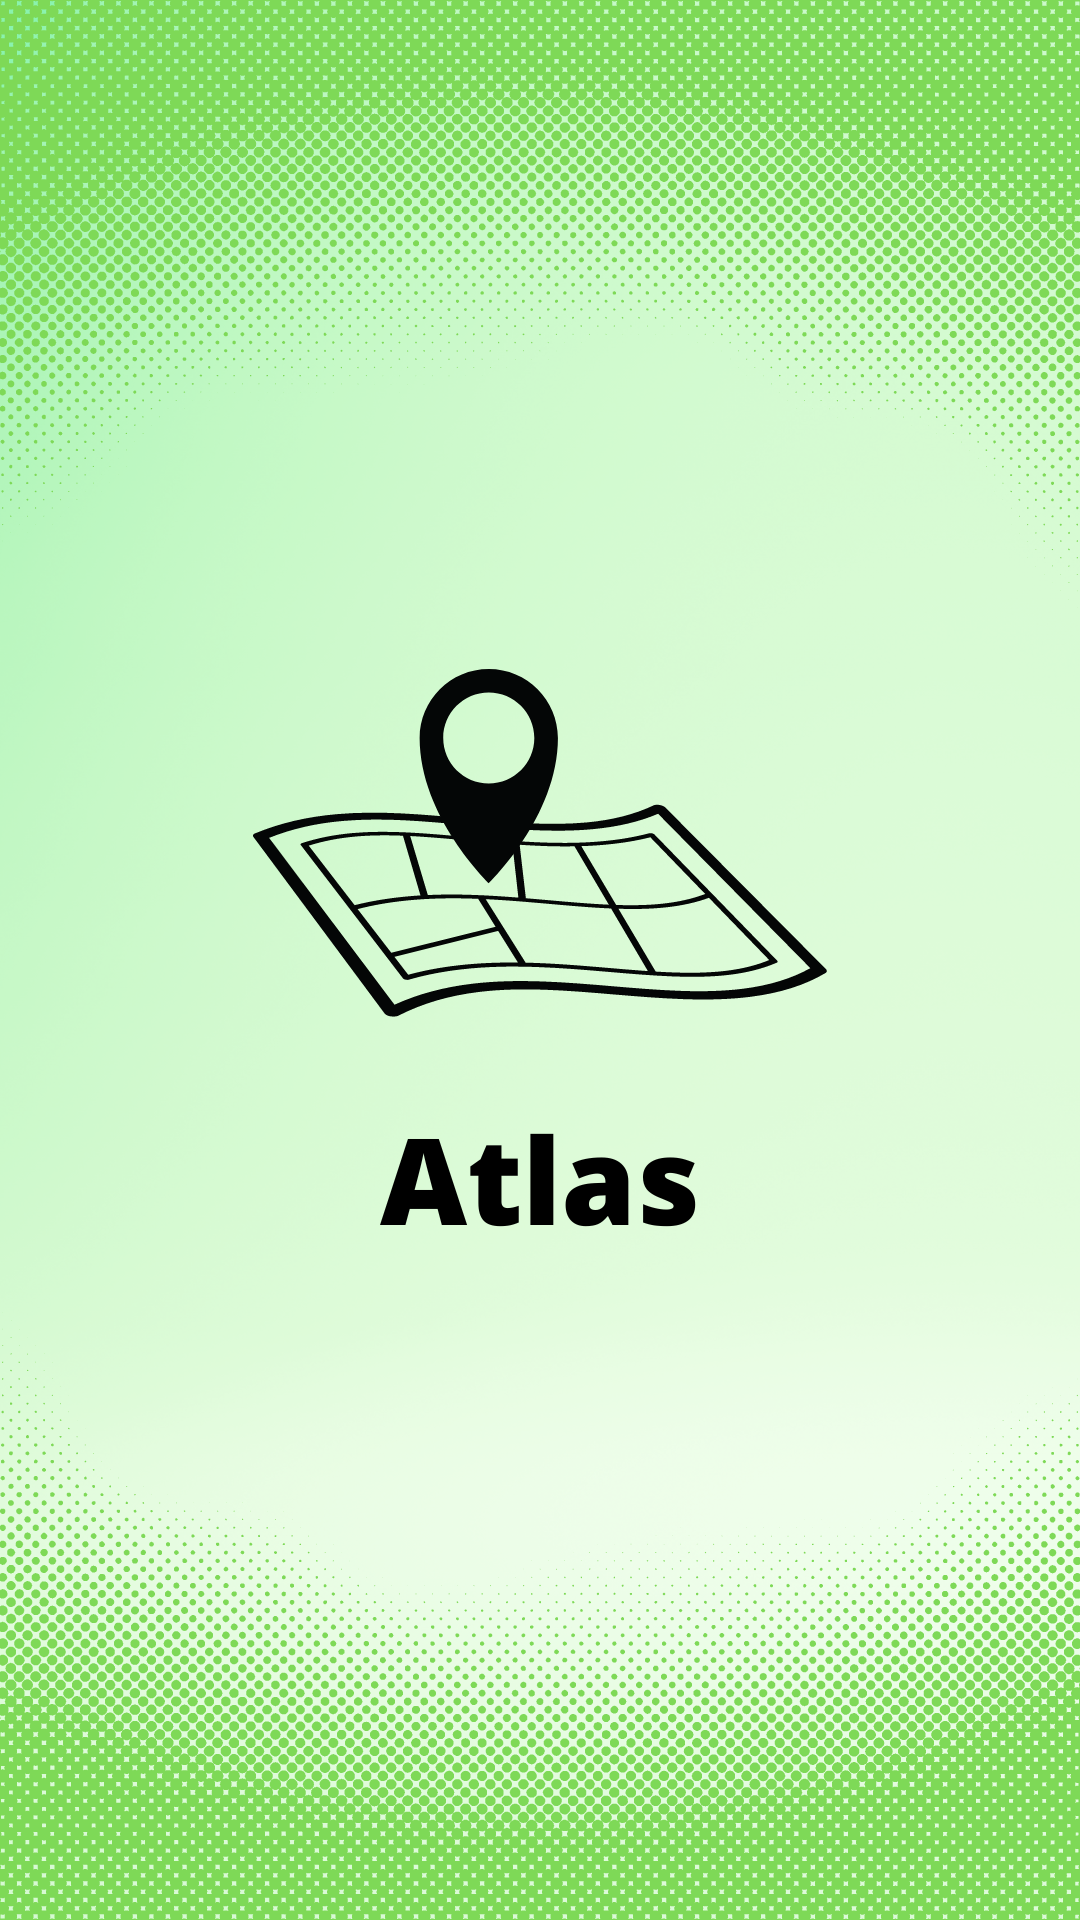 card-atlas